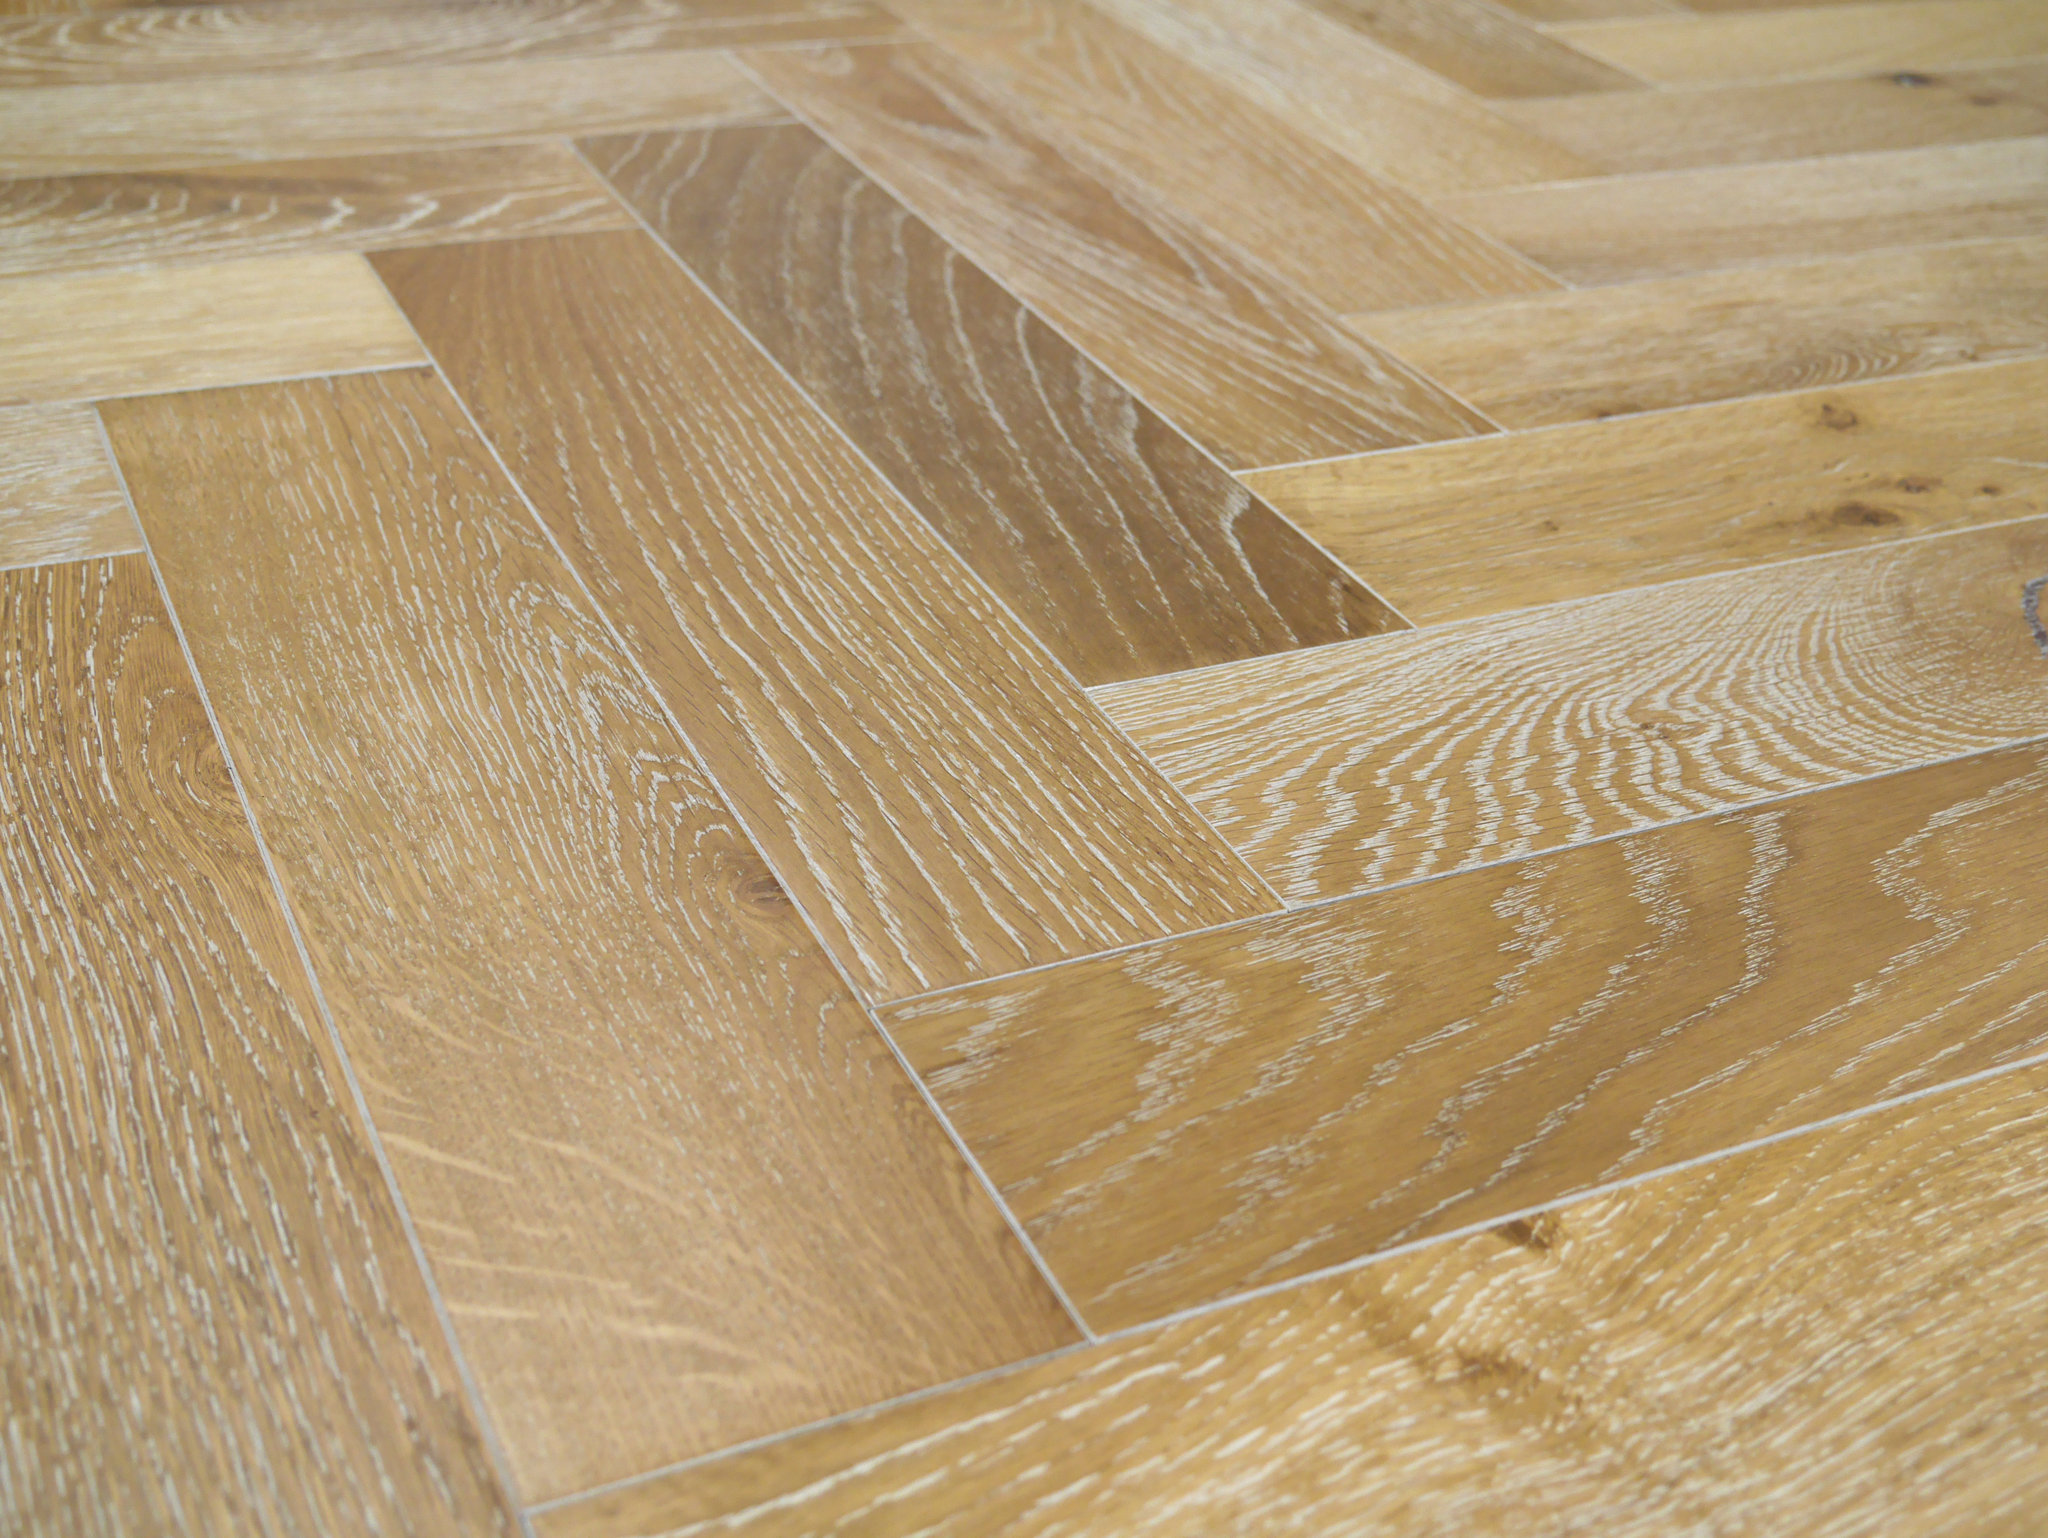 Timbercraft Herringbone Engineered Oak Parquet Flooring, Smoked White, Brushed & Oiled, 90x4x400 Mm image